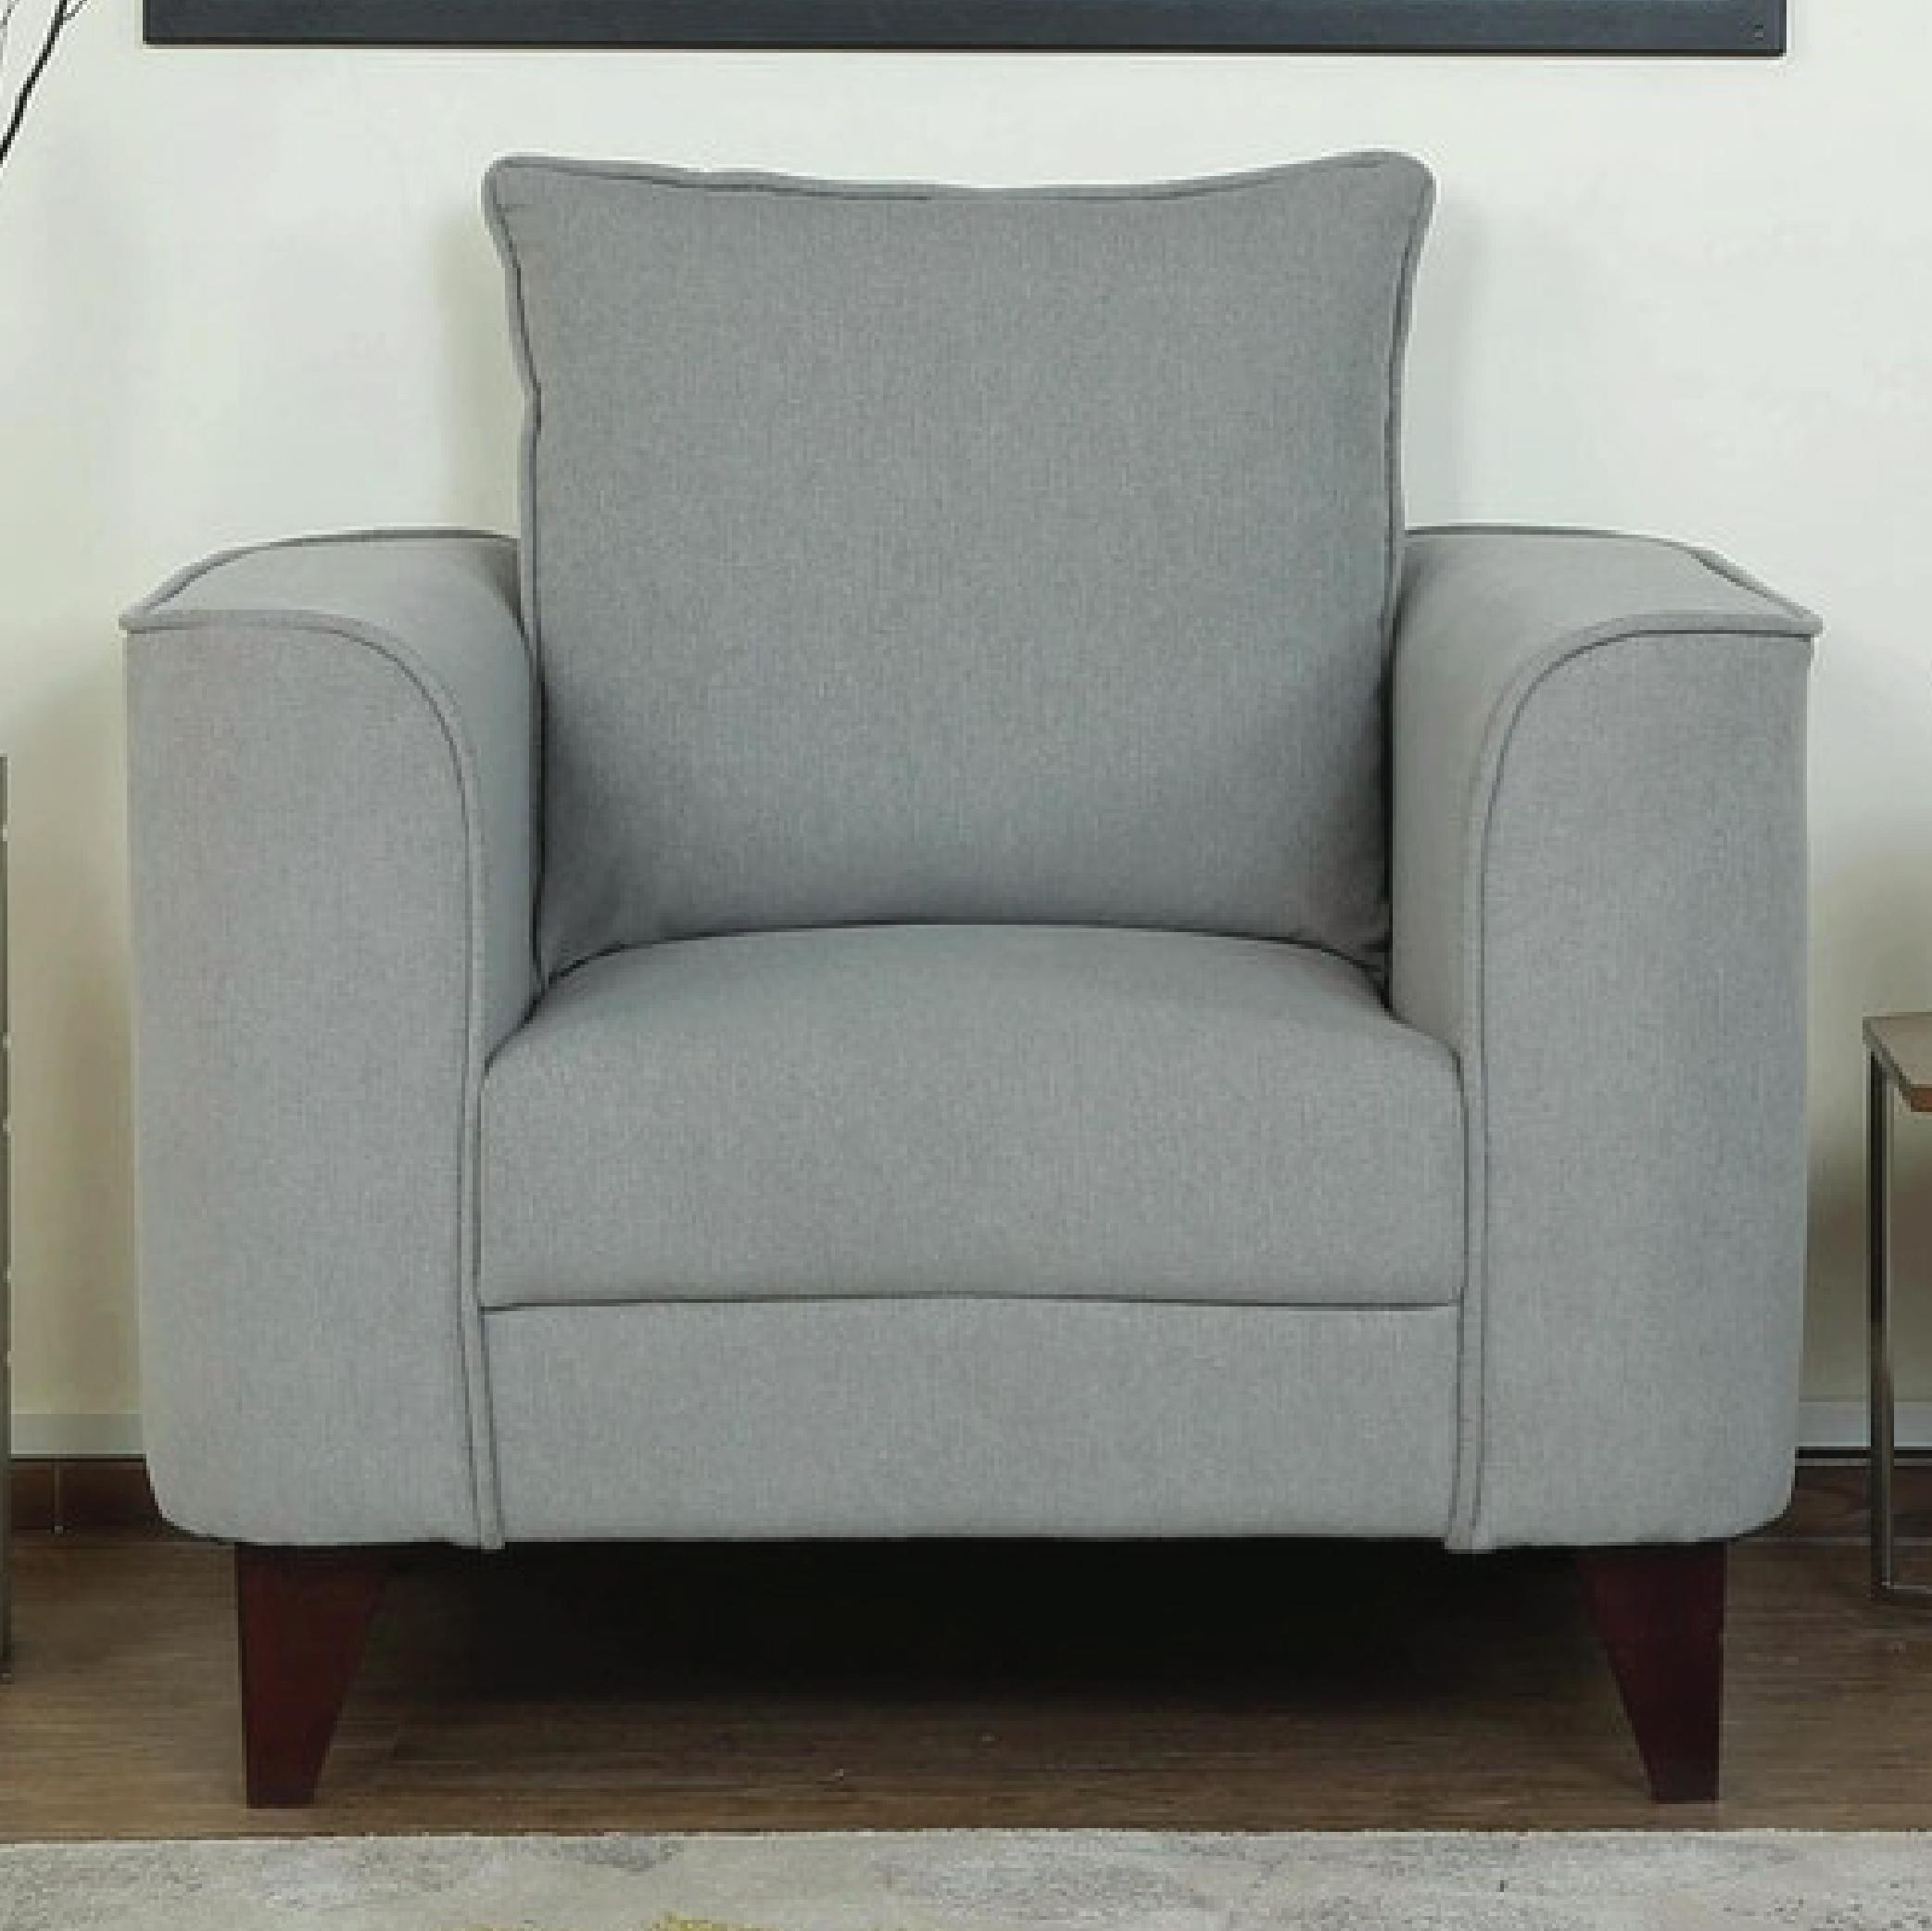 Sessa One Seater Sofa in Ash Grey Colour